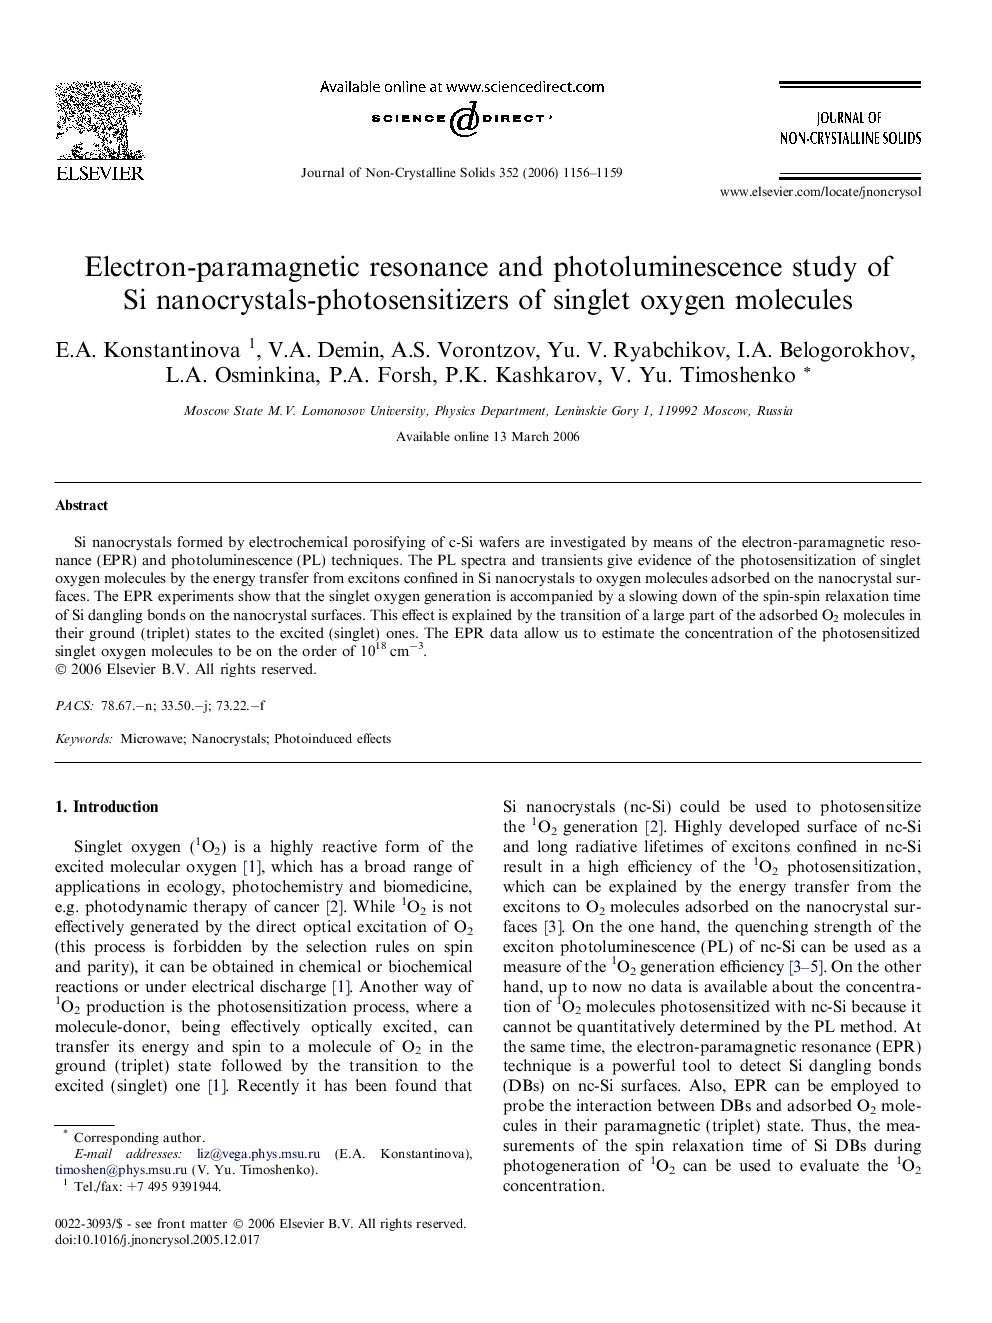 Electron-paramagnetic resonance and photoluminescence study of Si nanocrystals-photosensitizers of singlet oxygen molecules